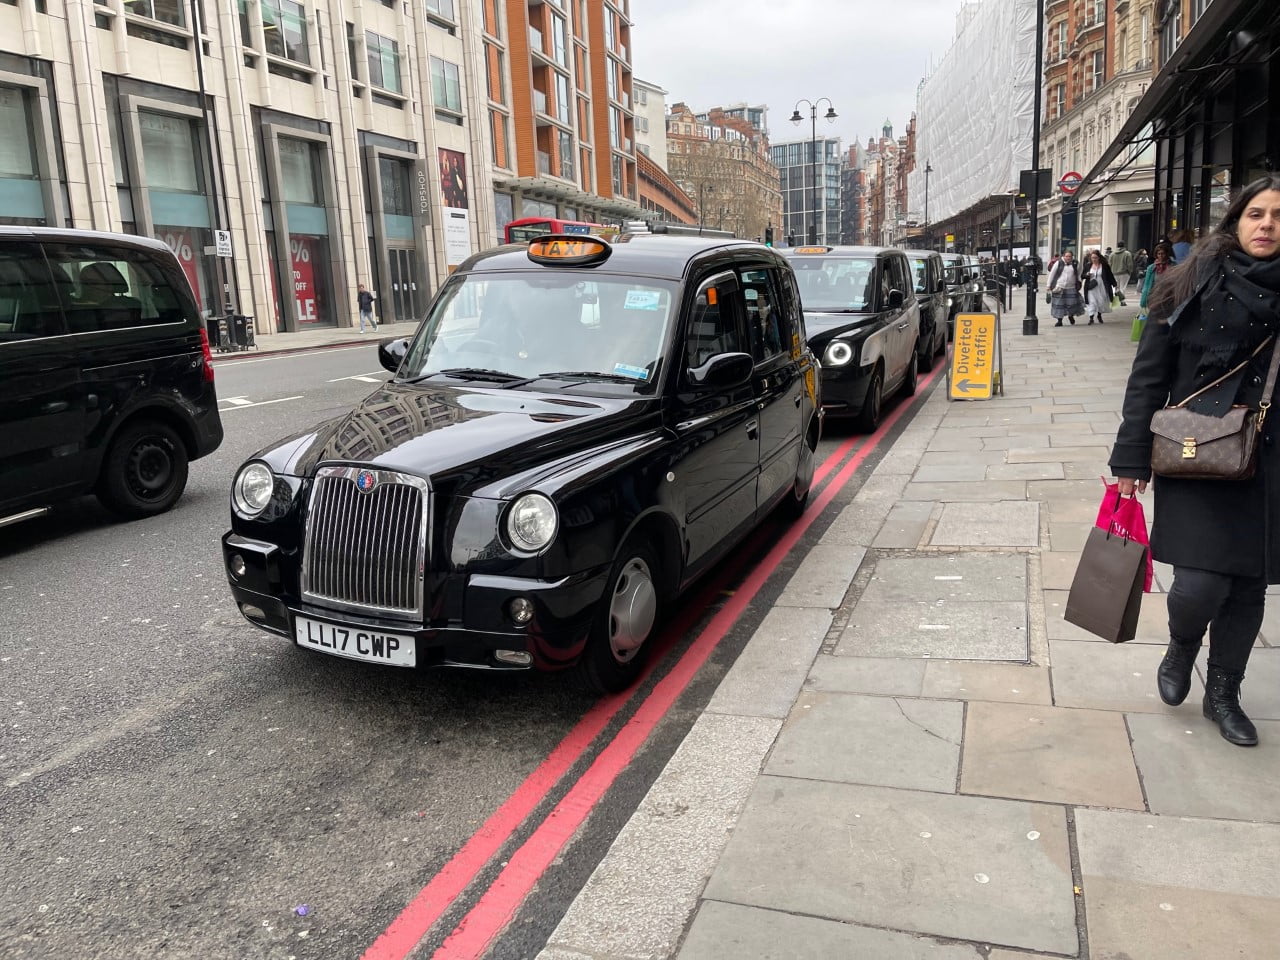 Londense taxichauffeurs werken twee uur extra